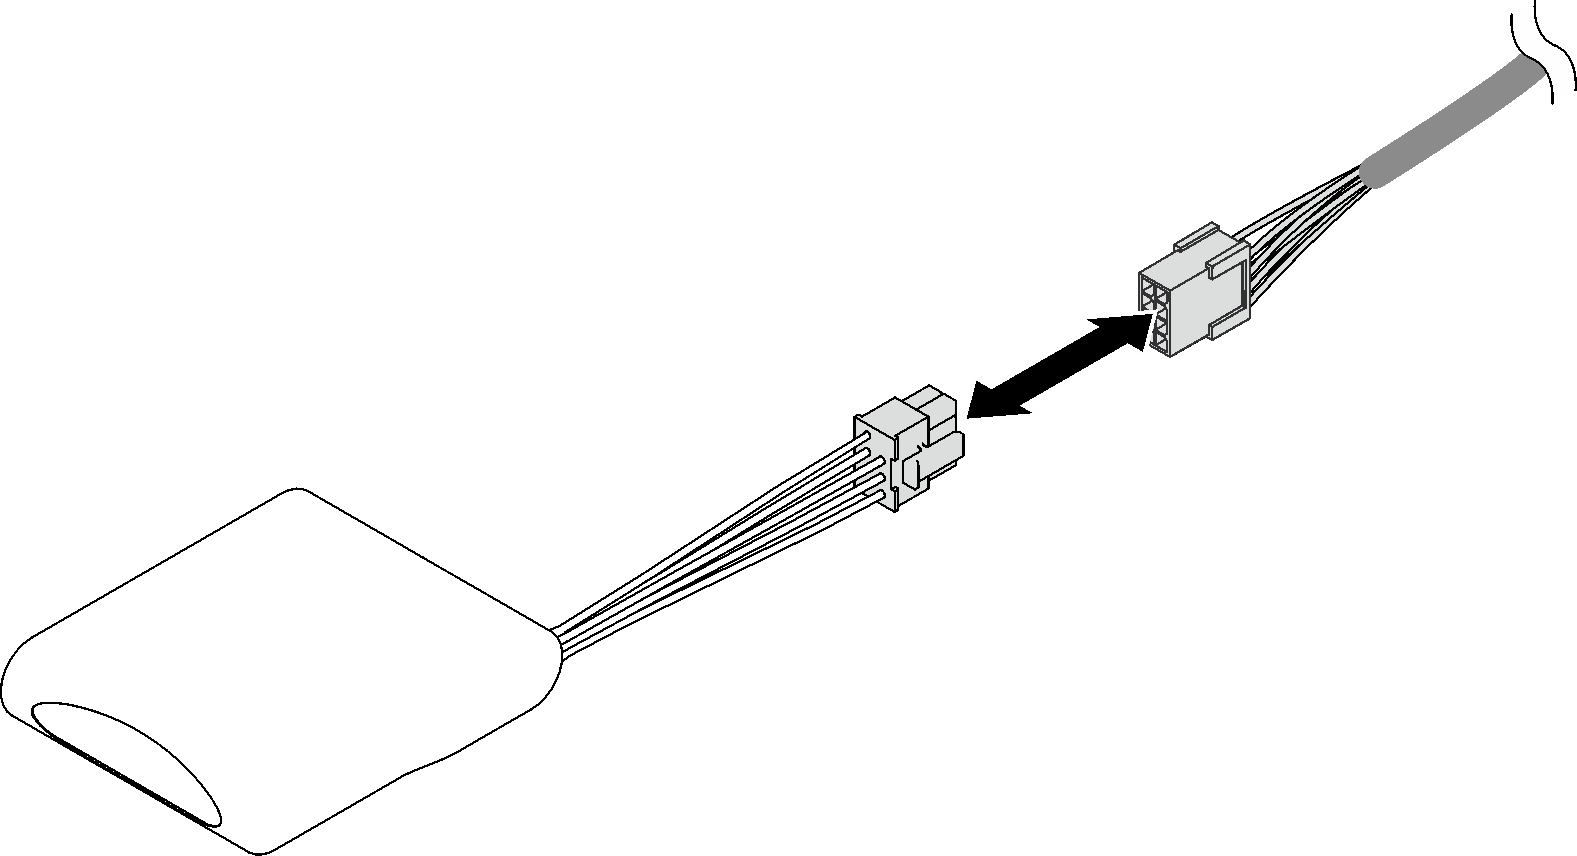 Flash power module cable disconnection